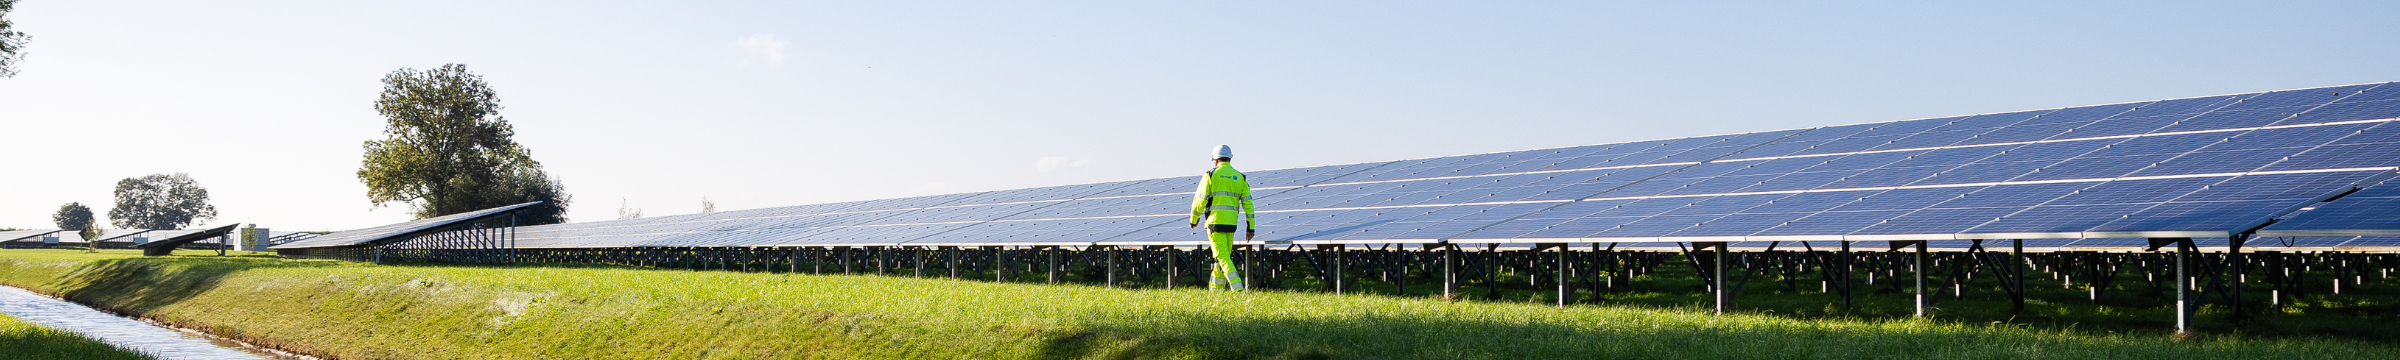 Man walking next to a solar panel